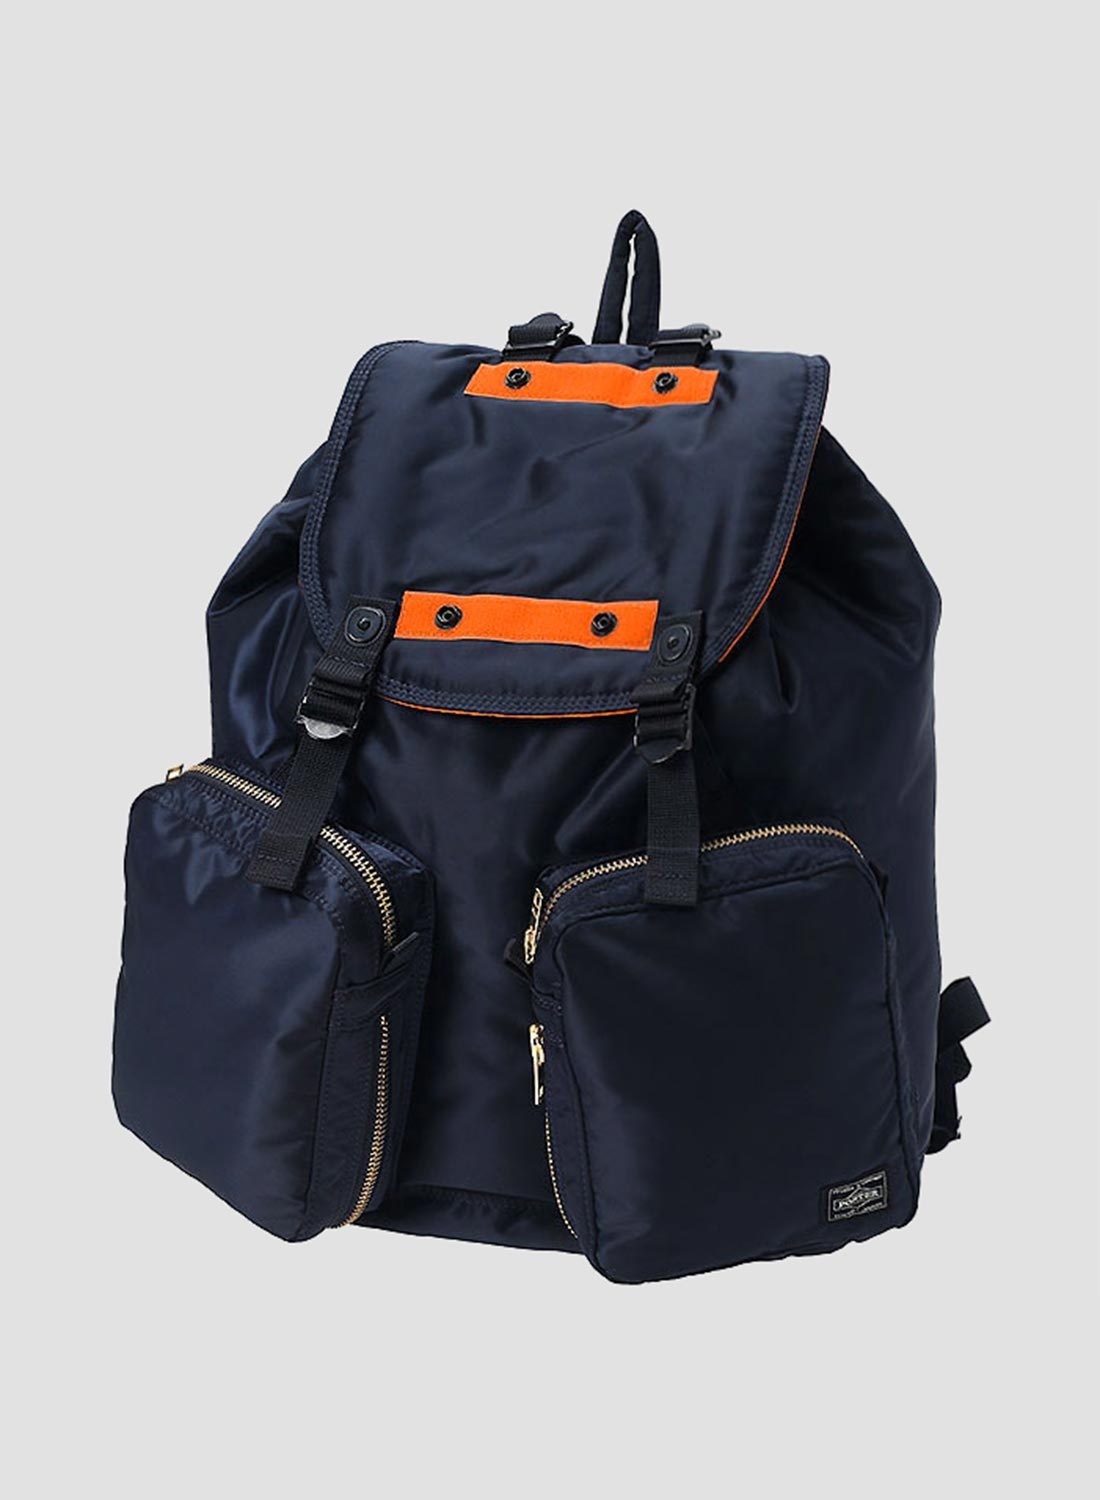 Porter-Yoshida & Co Tanker Backpack in Iron Blue - 12